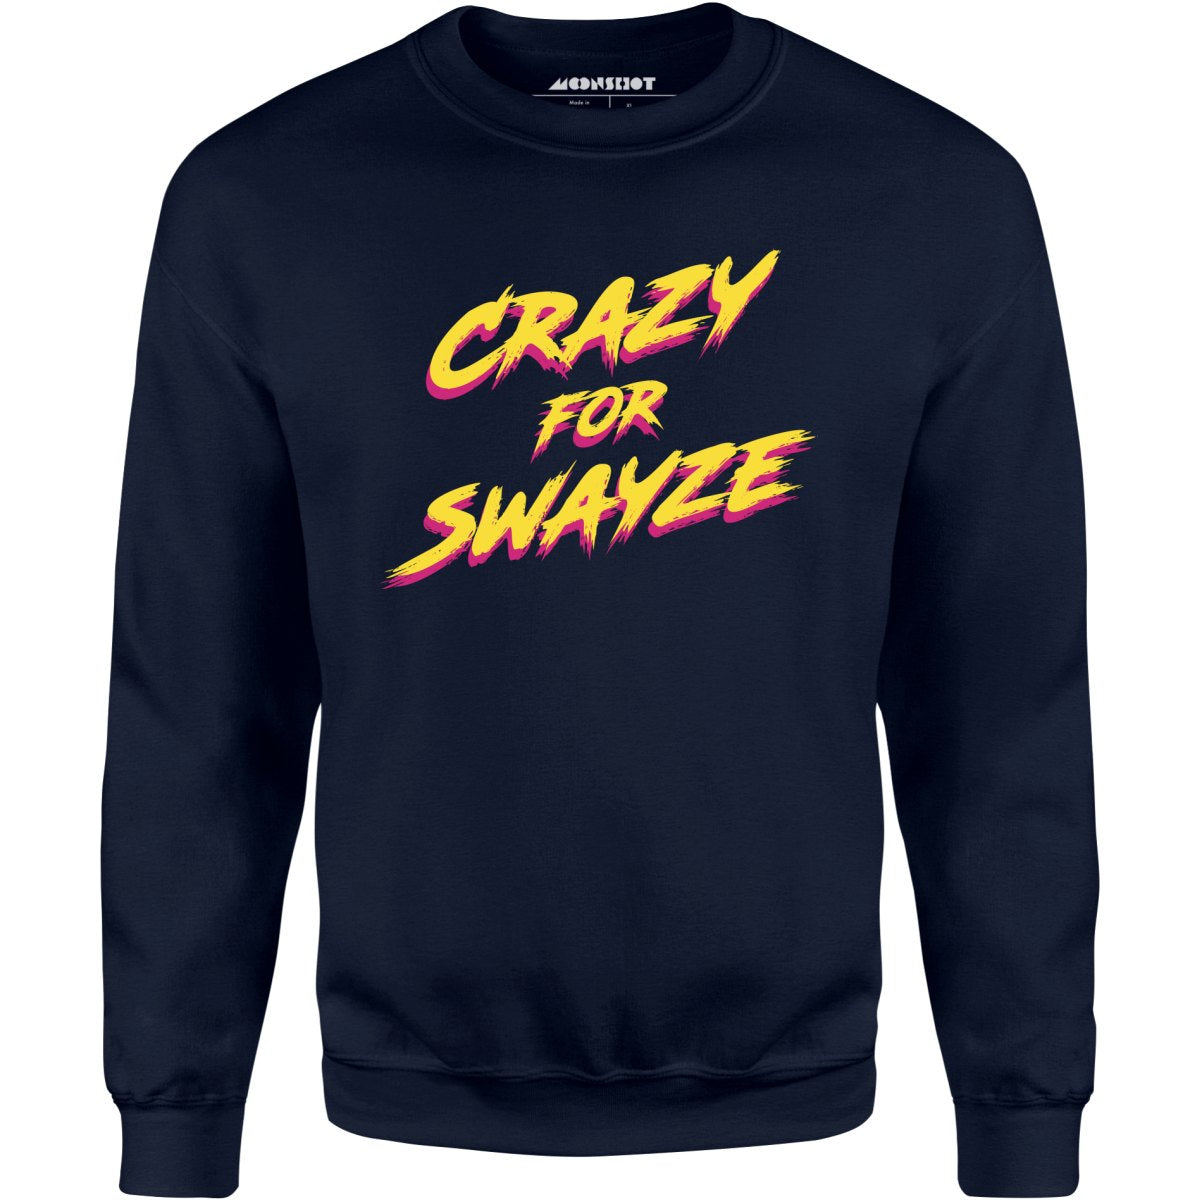 Crazy for Swayze - Unisex Sweatshirt